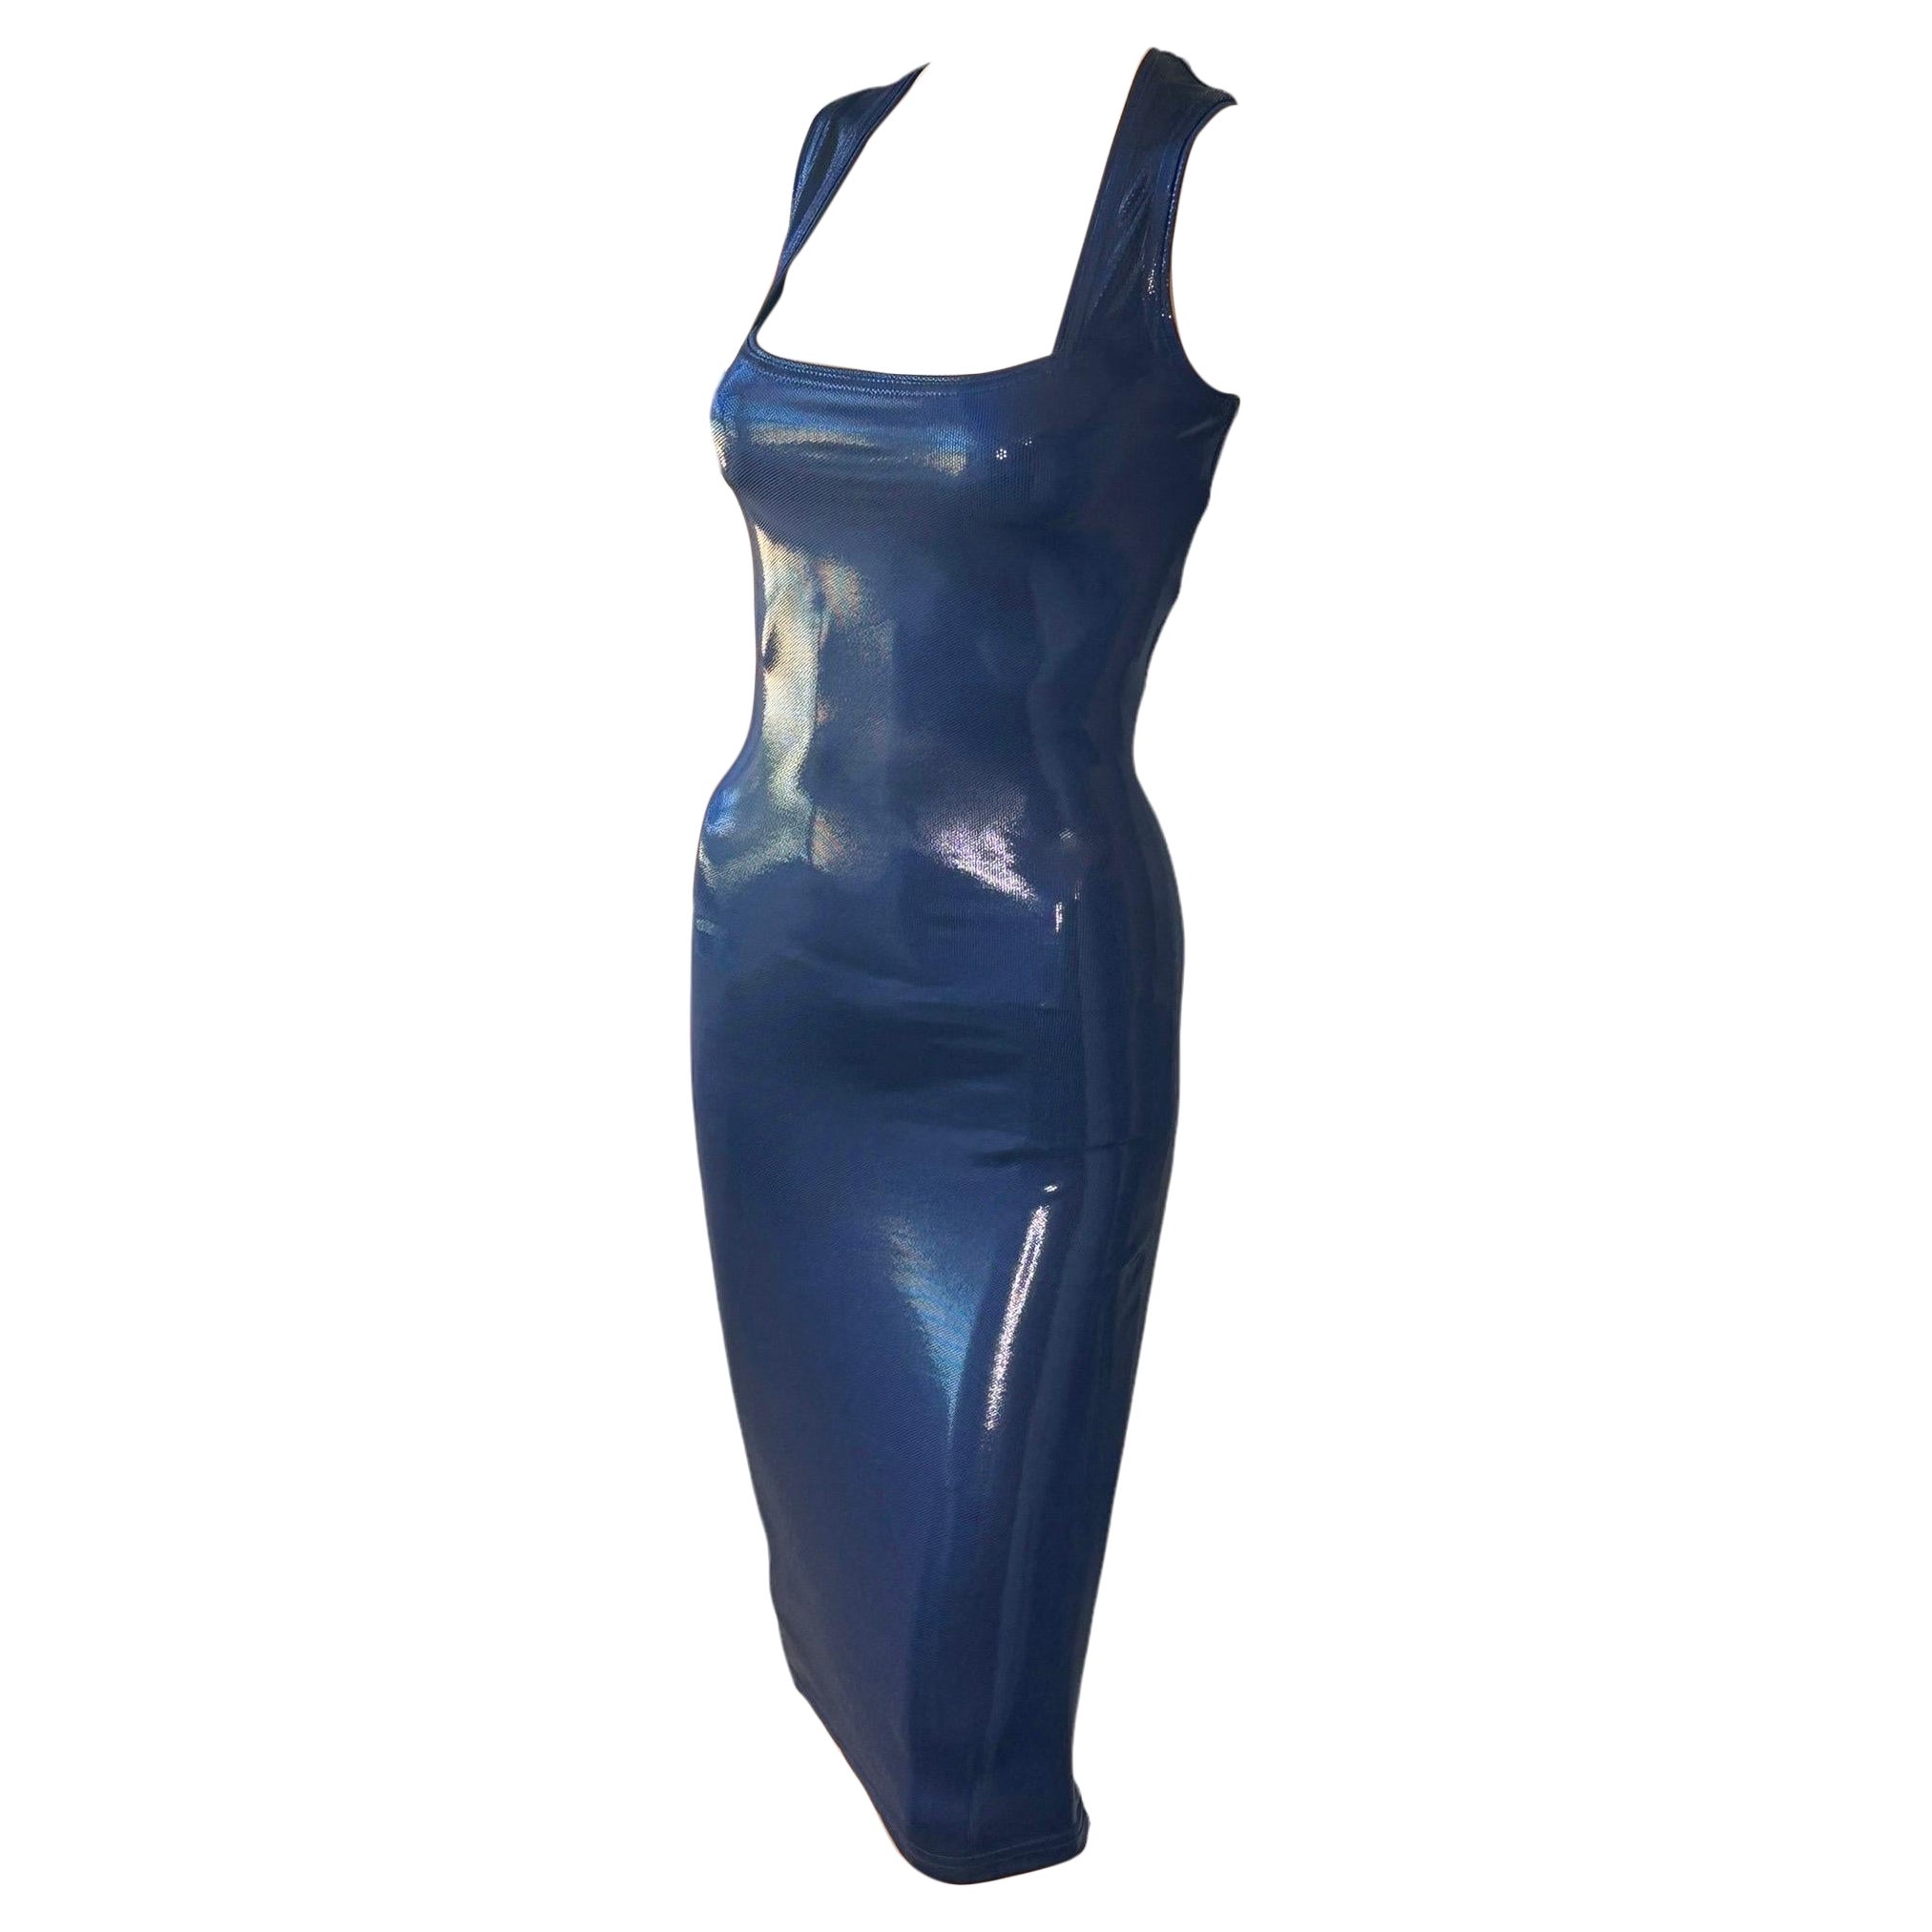 Gianni Versace c. 1994 Vintage Wet Look Stretch Bodycon Navy Blue Midi Dress